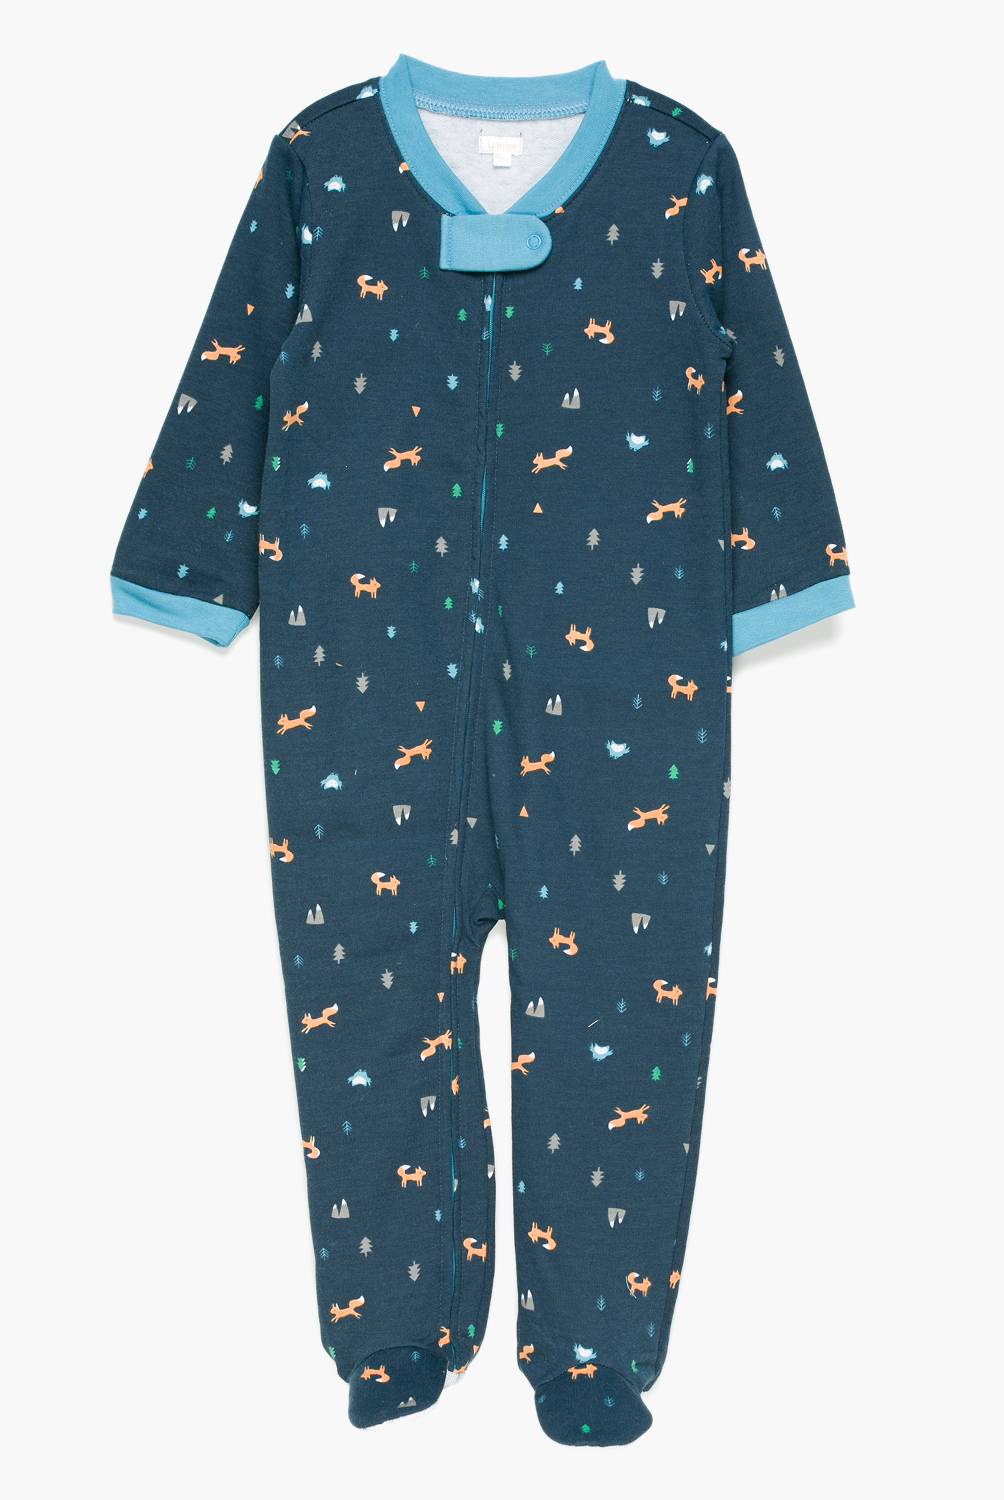 YAMP - Pijama algodón bebé niño